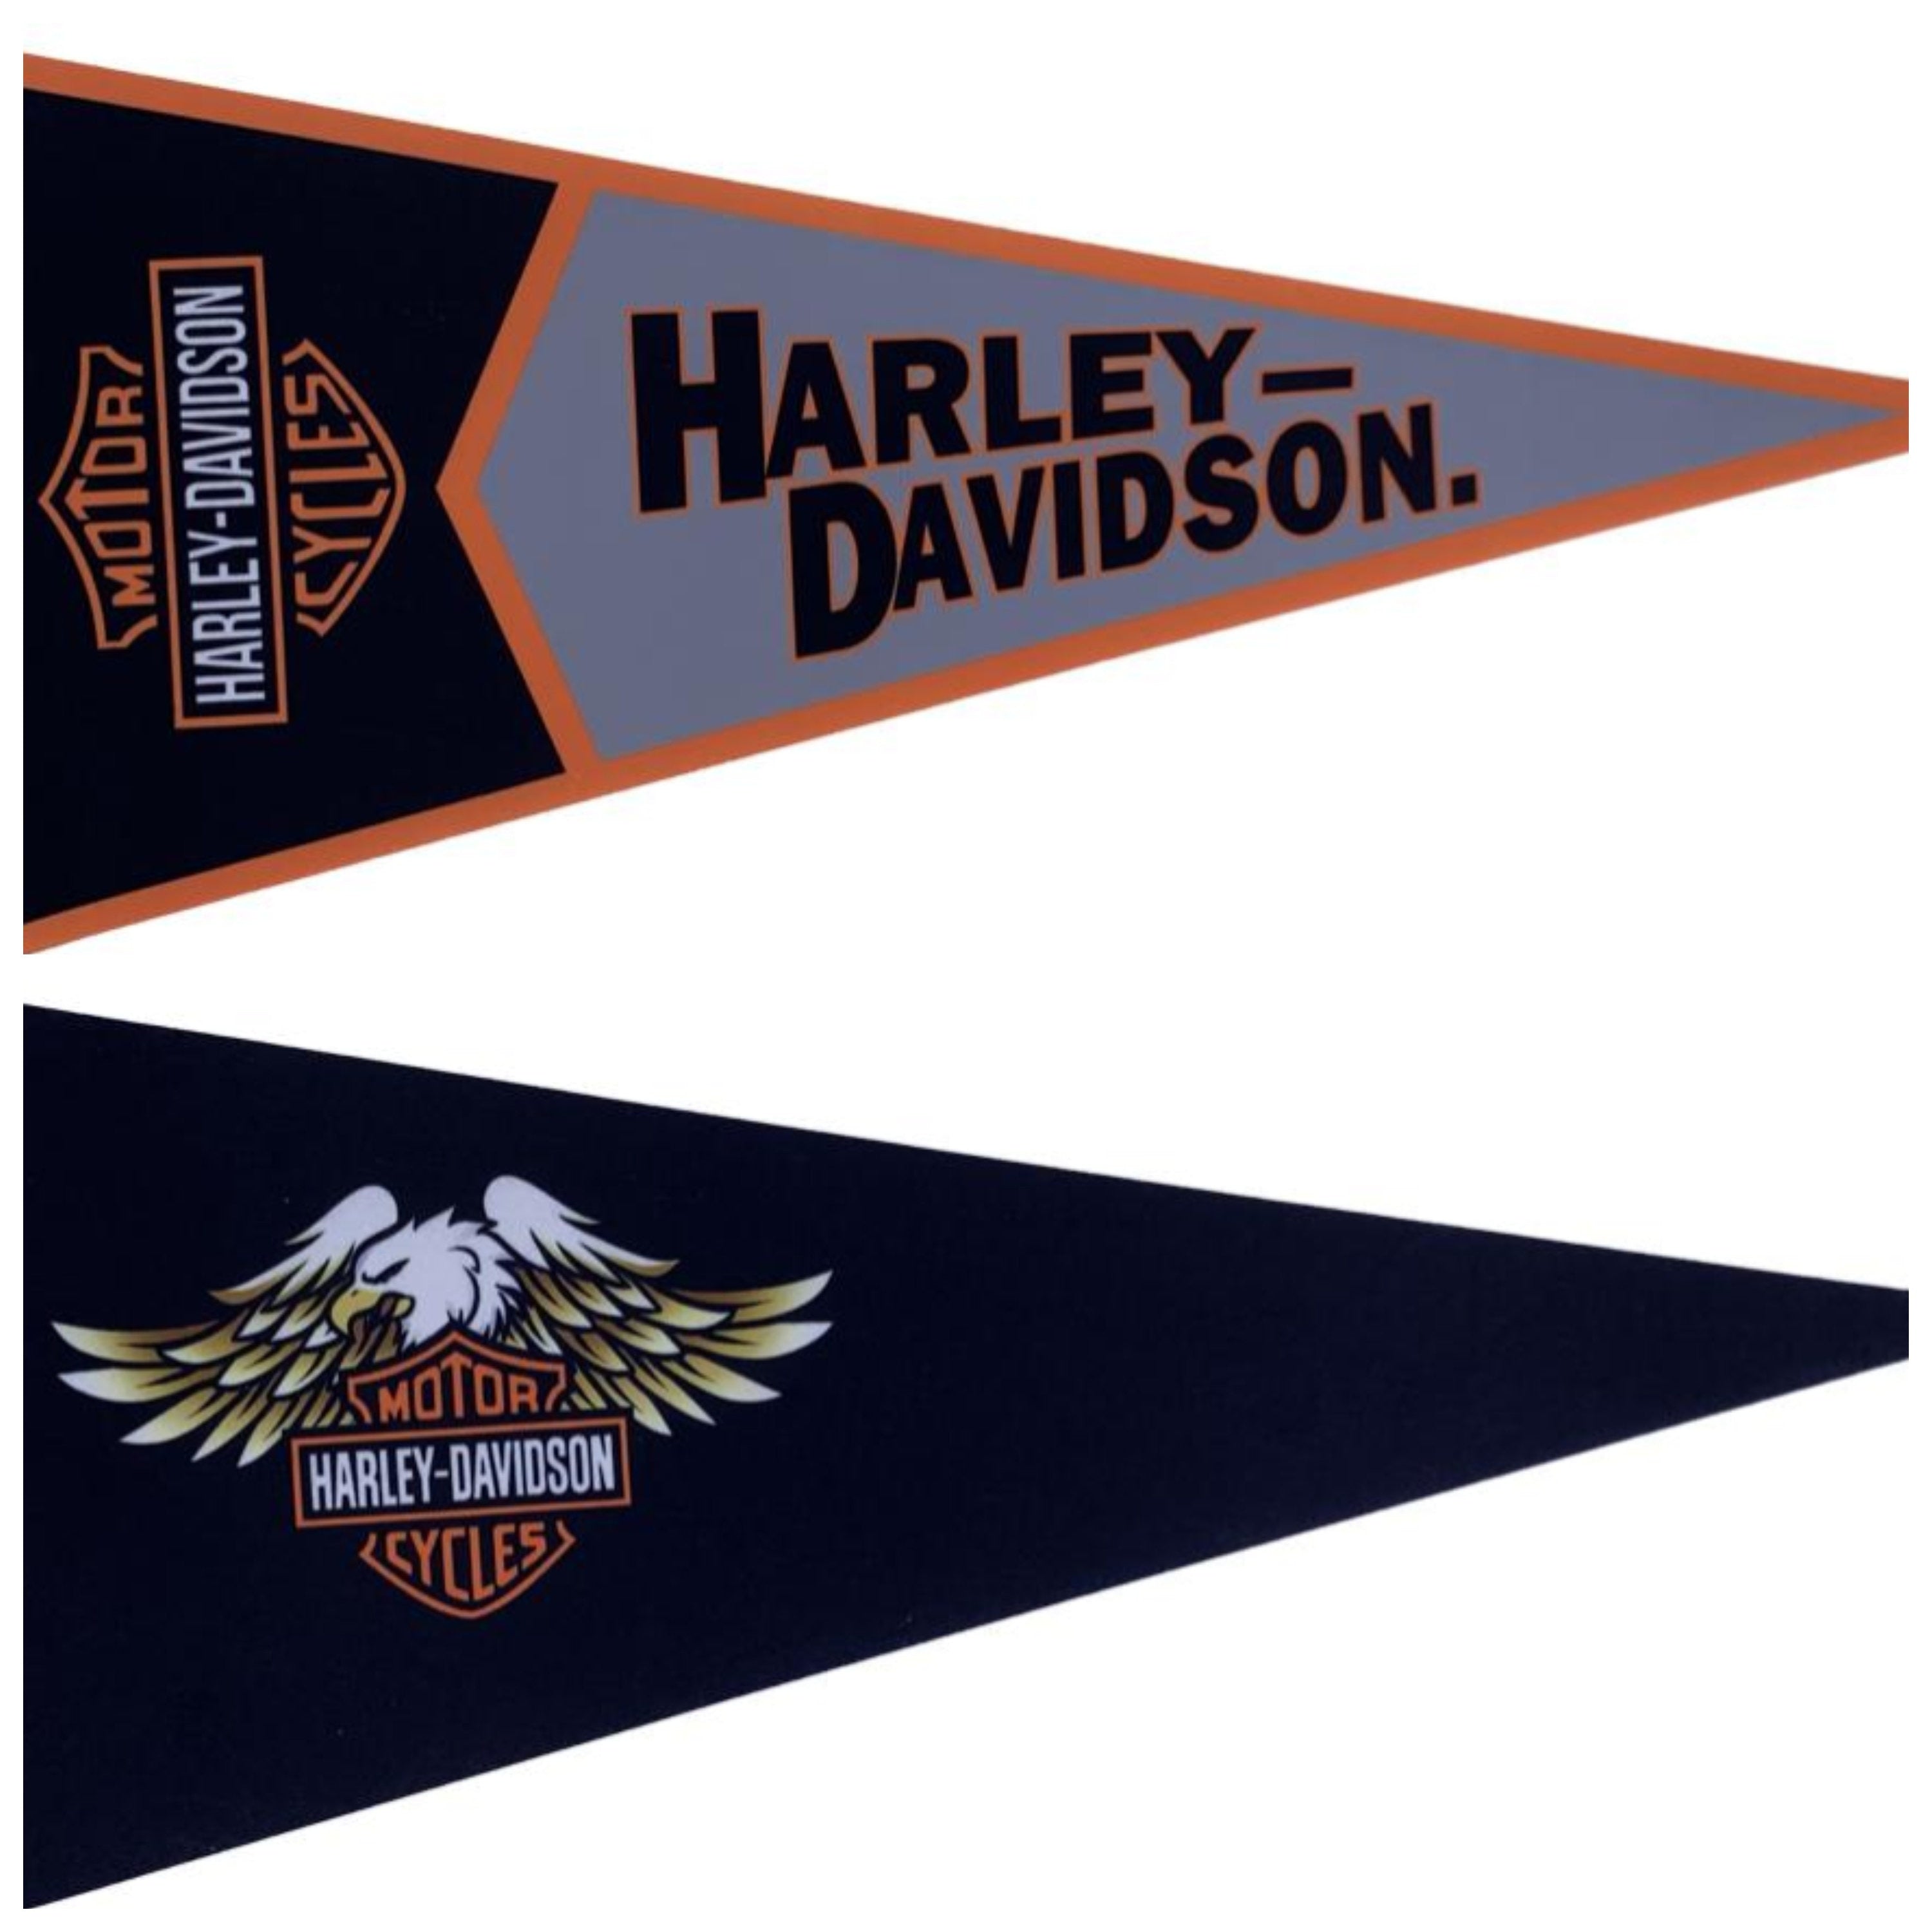 Harley Davidson Motorcycles motoren usa wimpels vaantje vlaggetje vlag vaantje fanion wimpel vlag vintage americana wand decor motoren - Grey